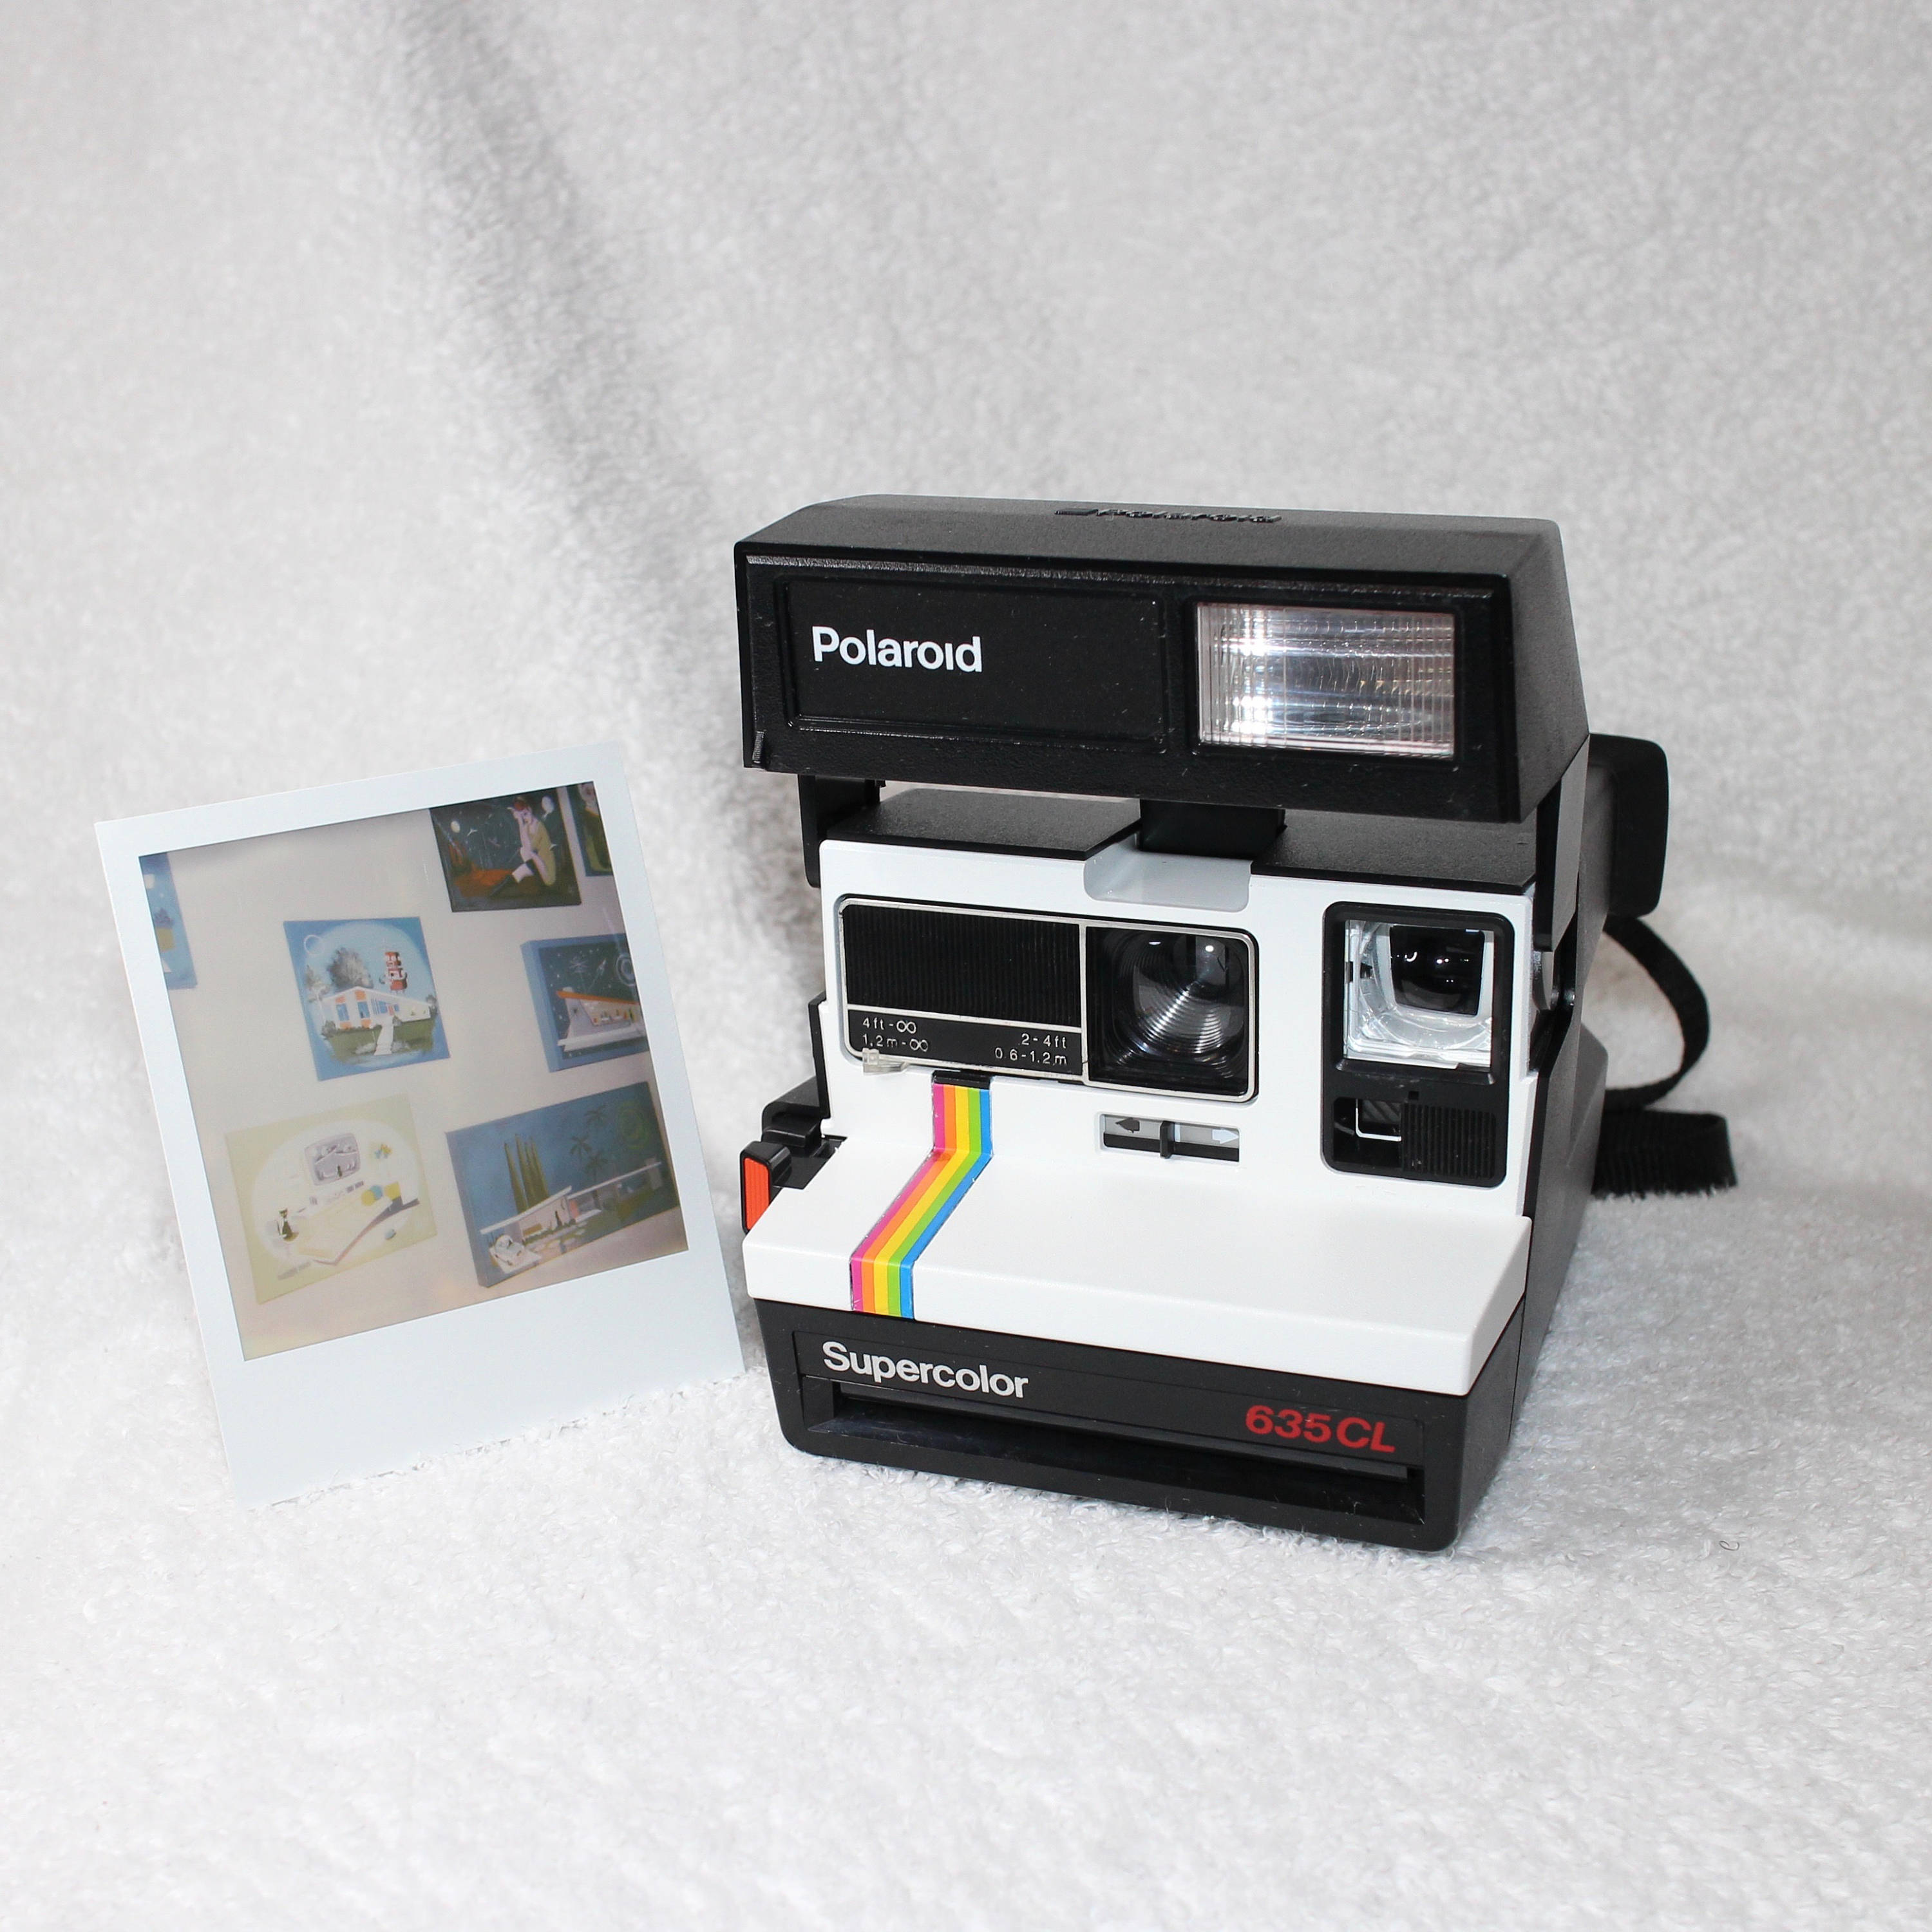 Fun Rainbow Polaroid Supercolor 635 With CloseUp Lens